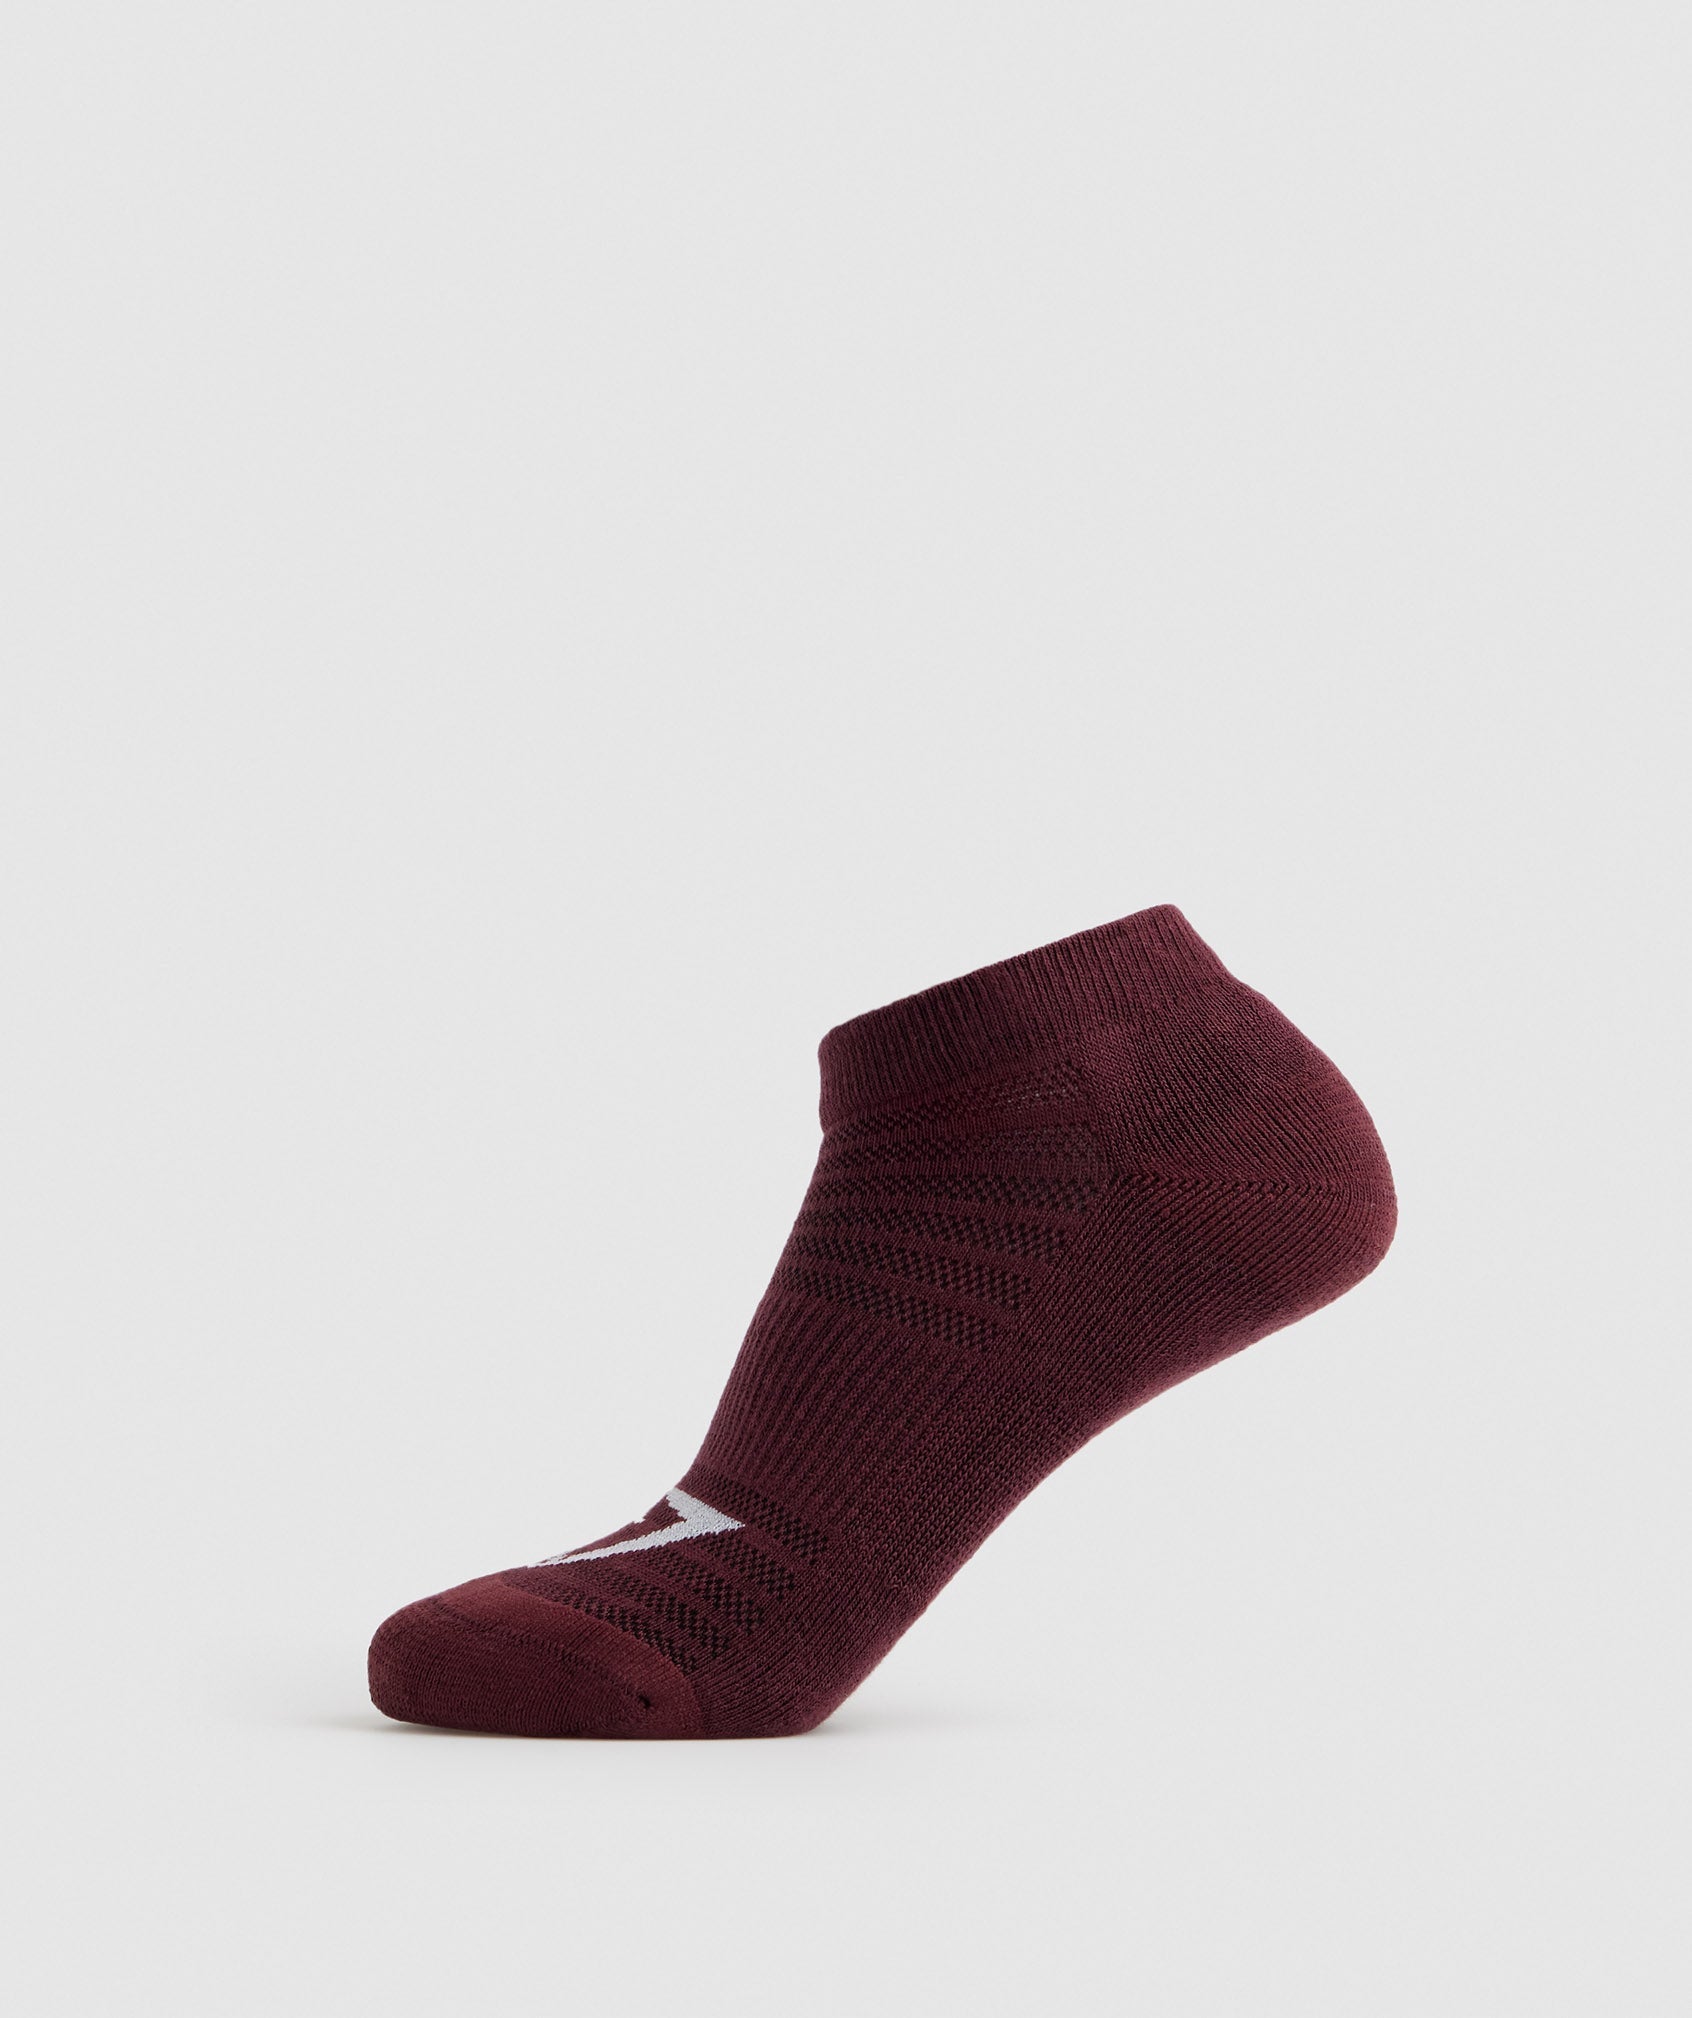 Ankle Socks 3pk in Baked Maroon/Sweet Pink/White - view 5